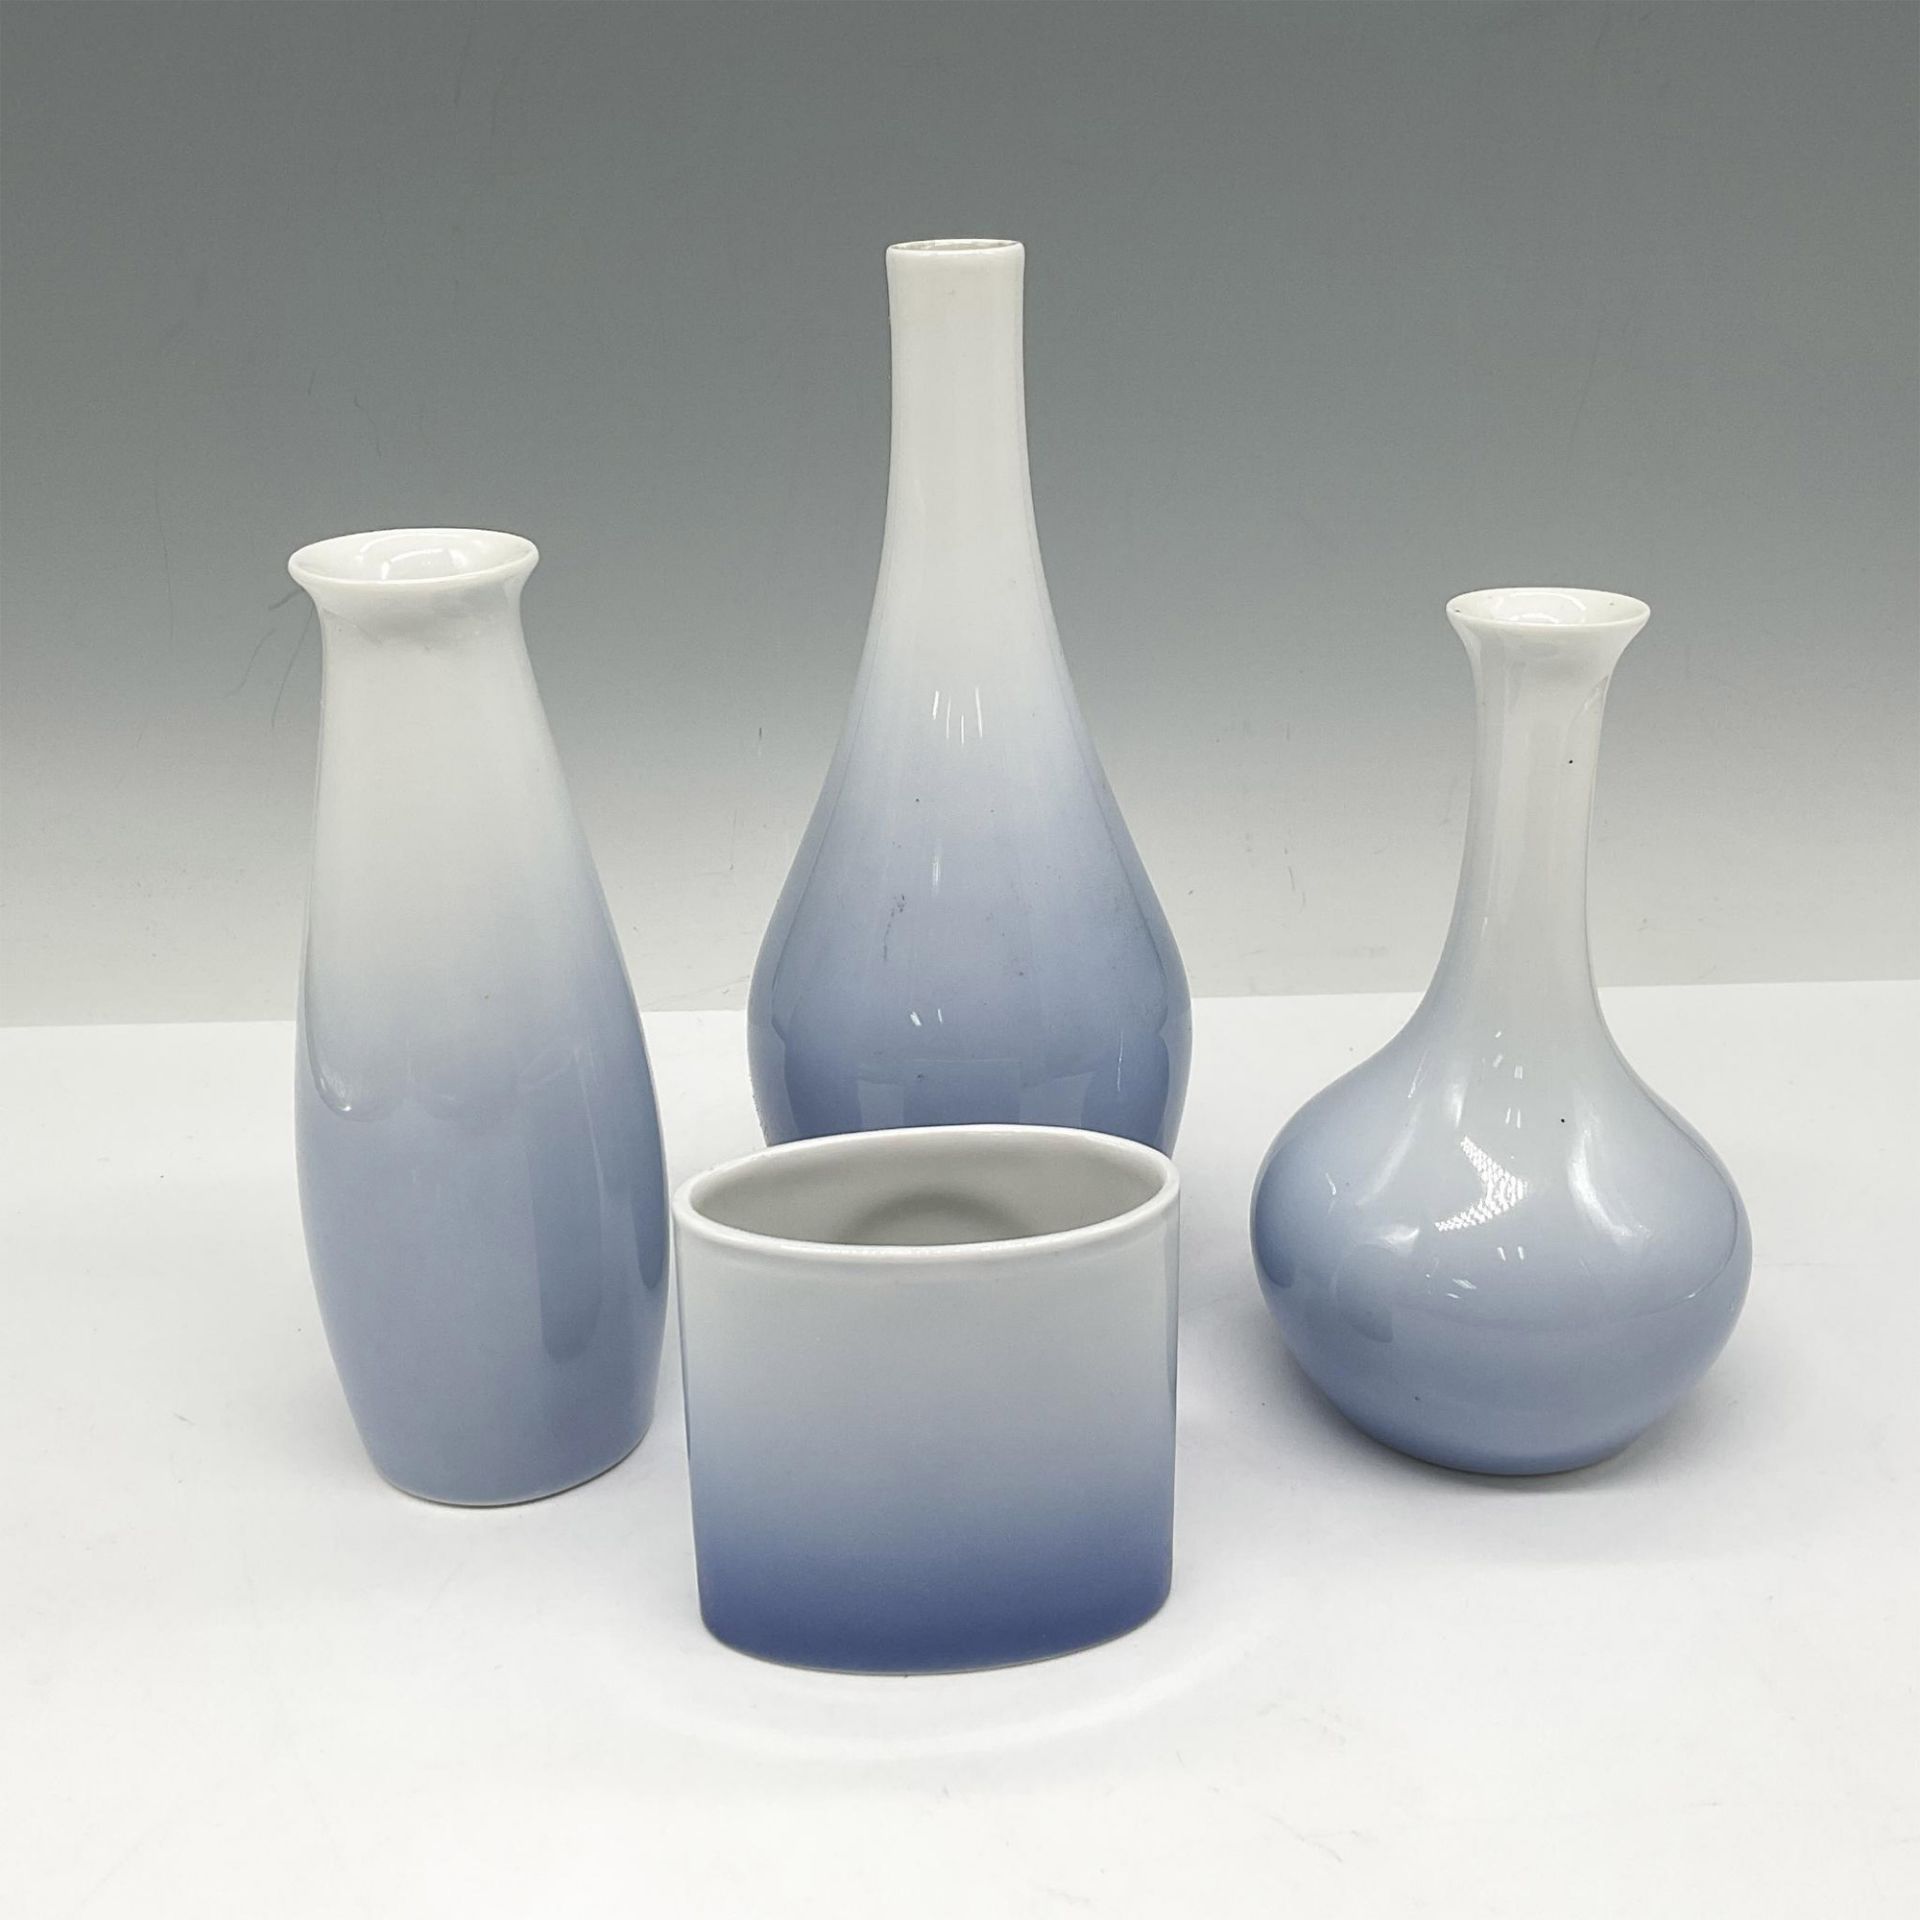 4pc Bing & Grondahl Porcelain Bud Vases - Image 2 of 3